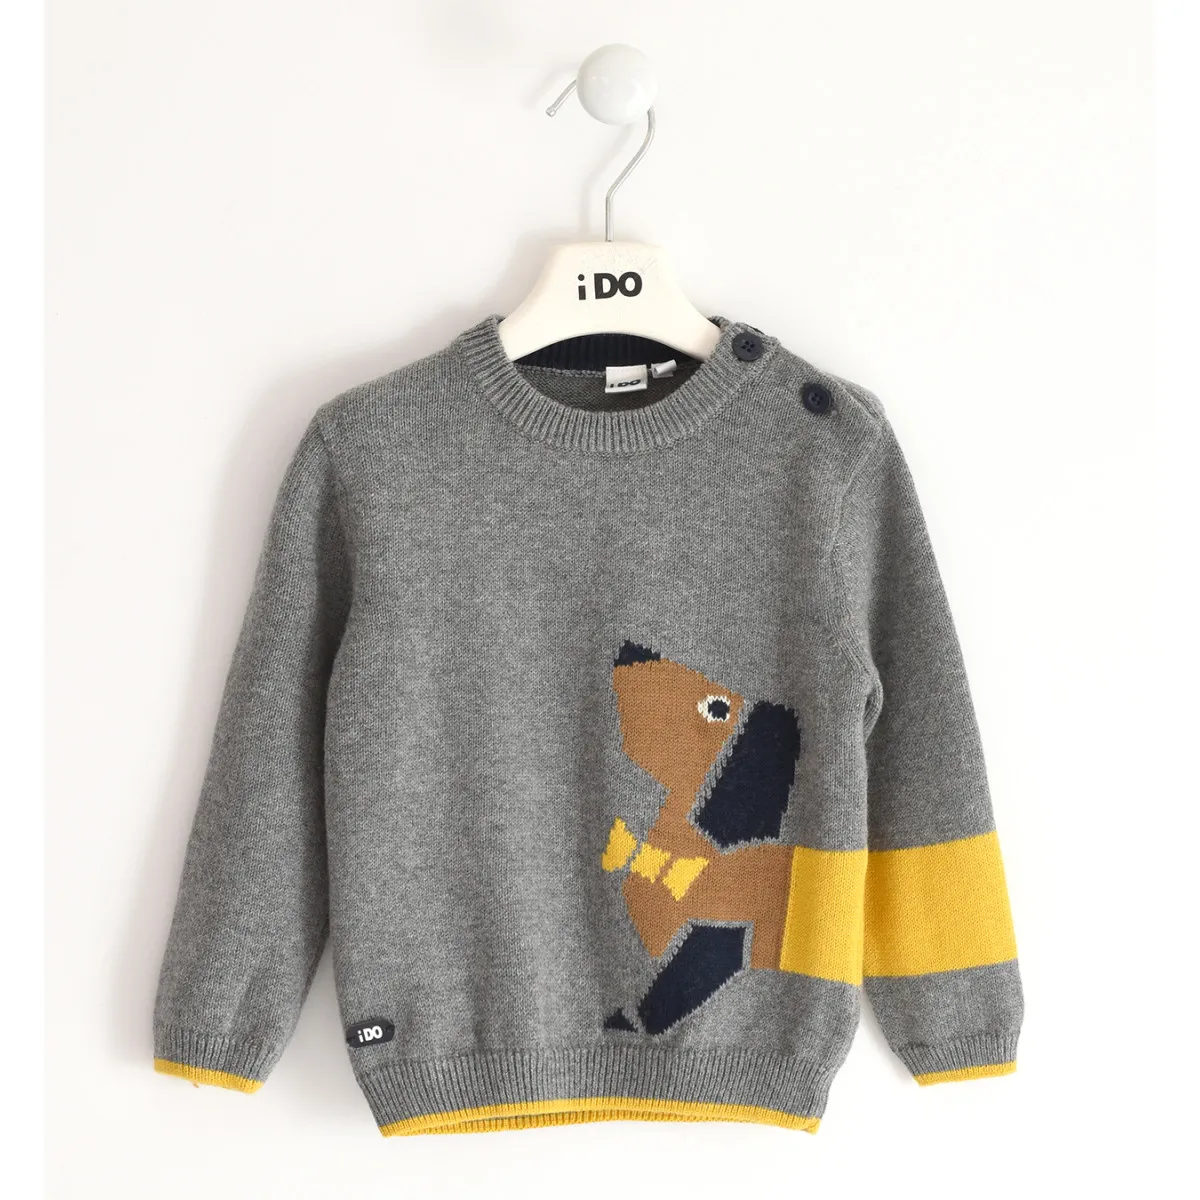 iDO džemper, 92-116